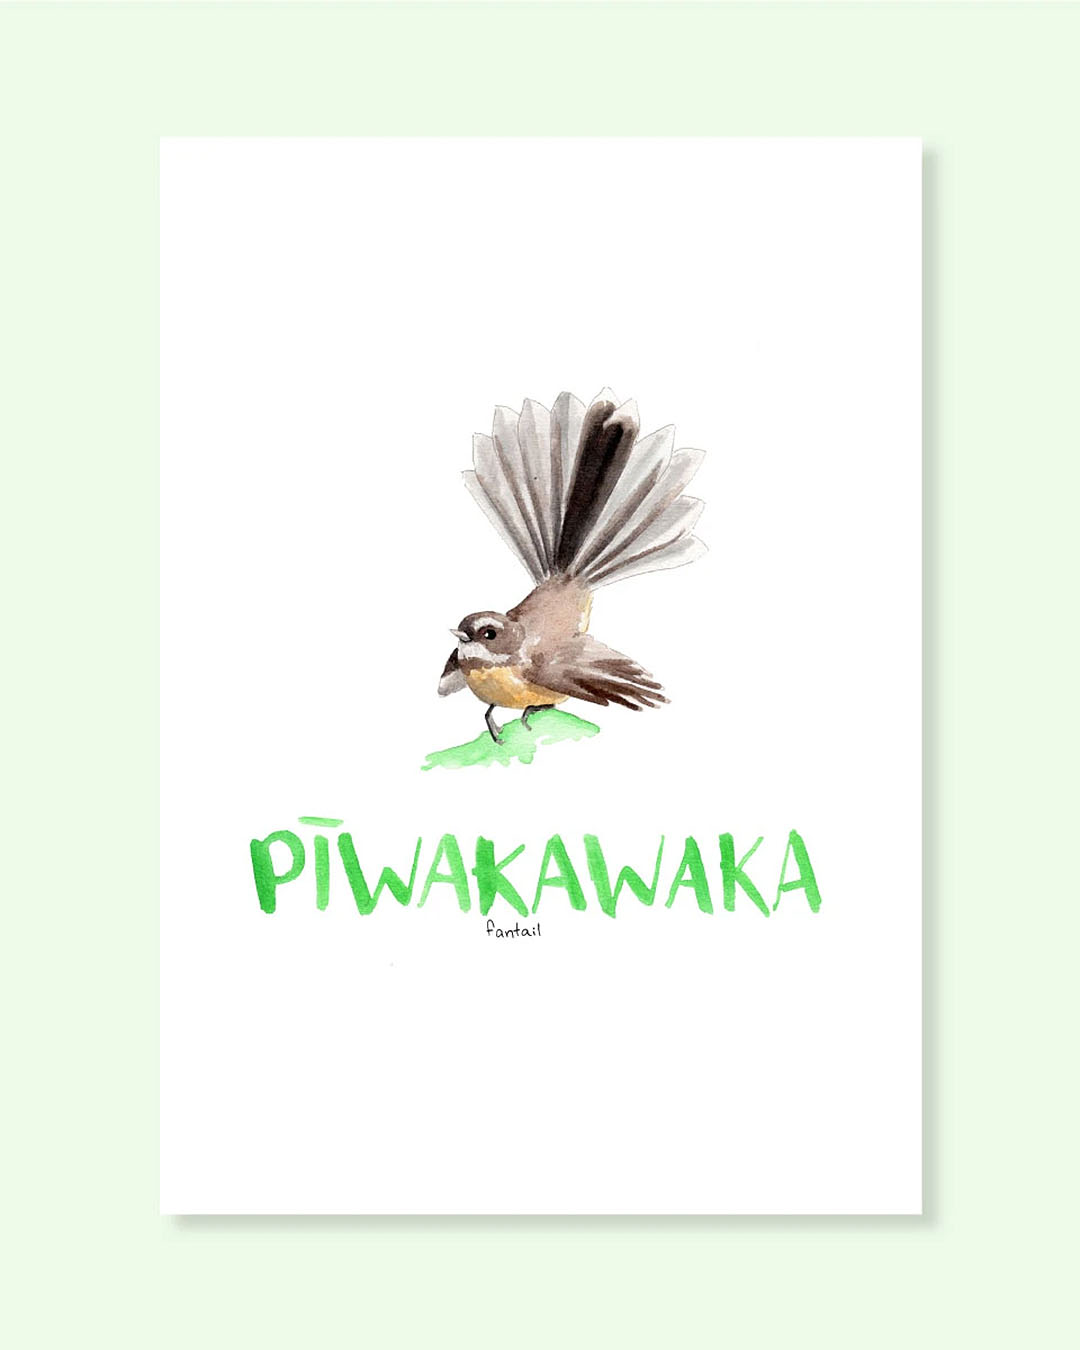 An inquisitive little piwakawaka bird painted with watercolours. 